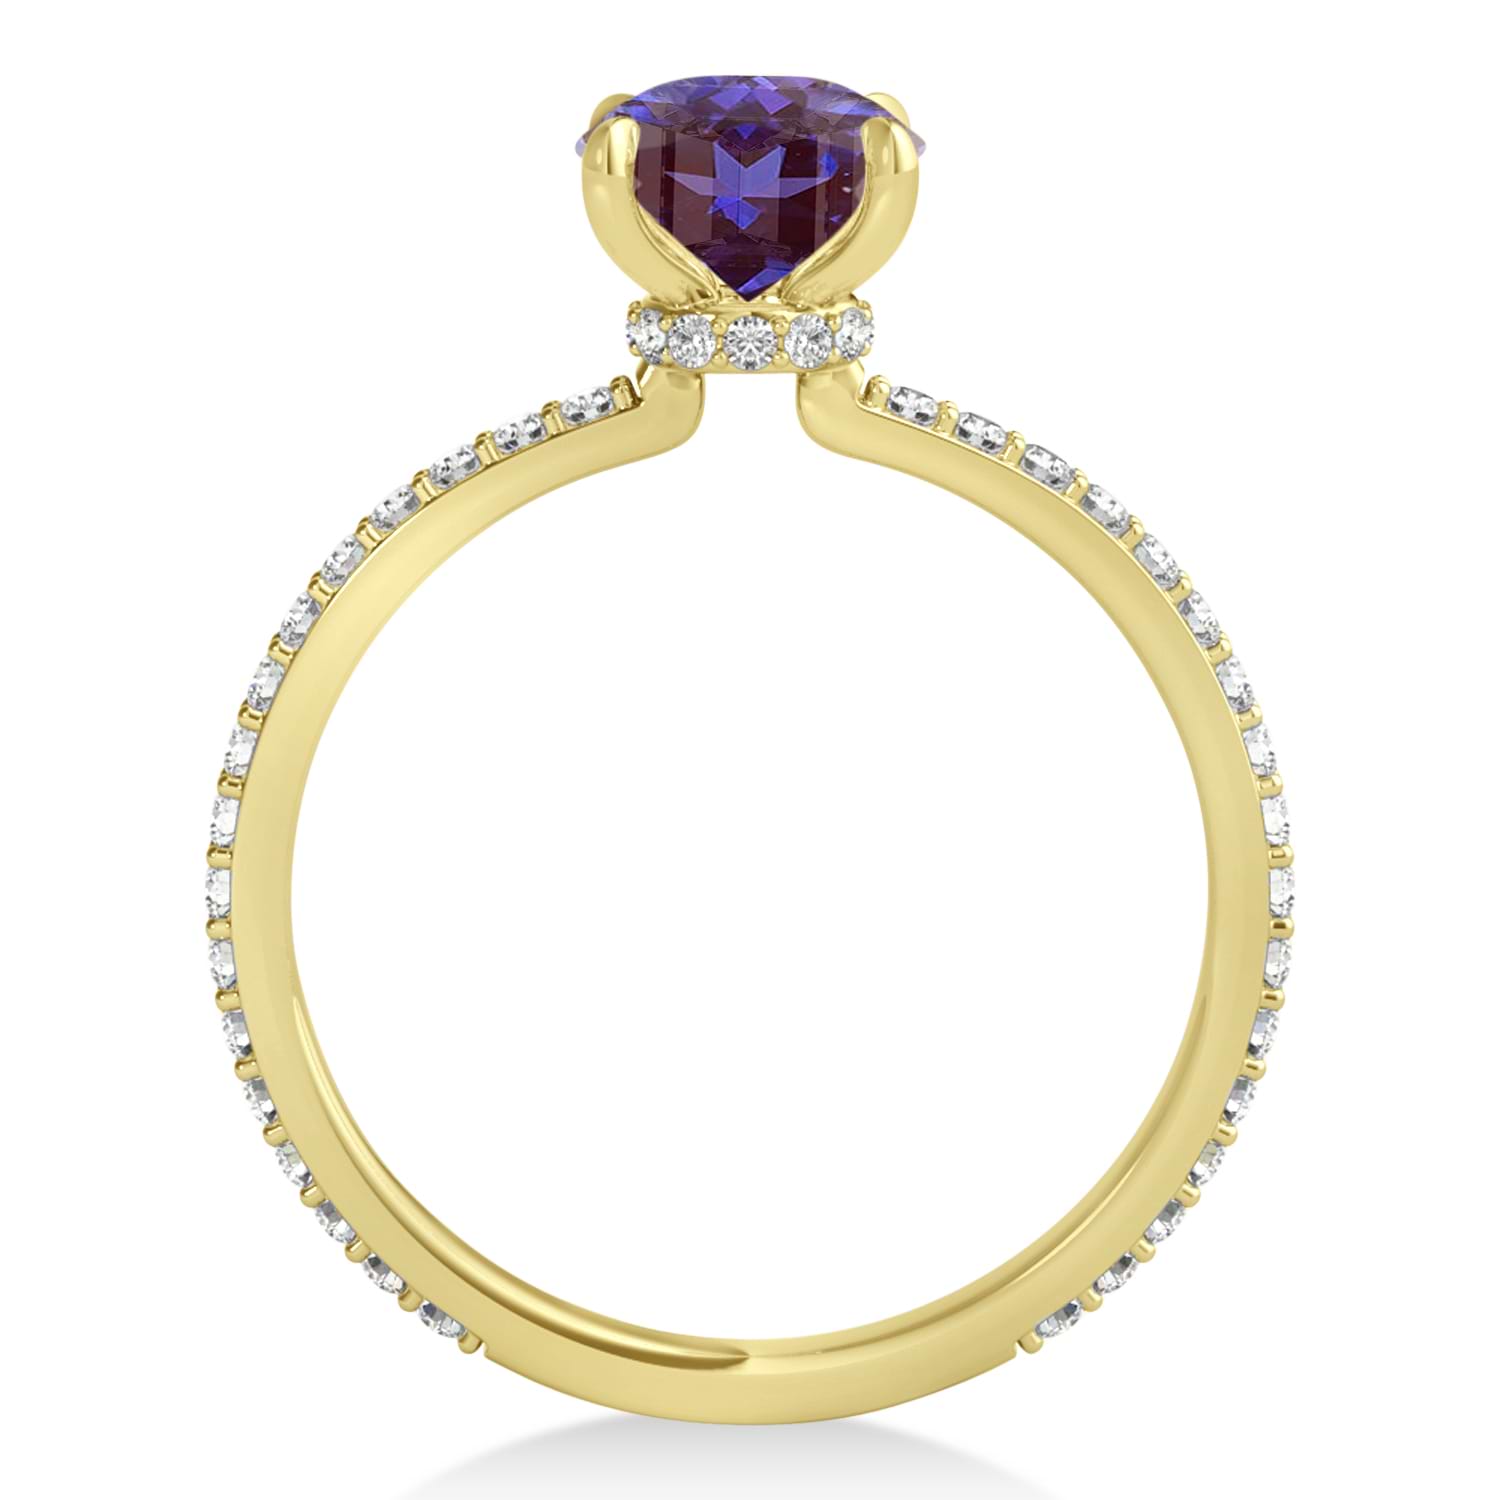 Oval Alexandrite & Diamond Hidden Halo Engagement Ring 14k Yellow Gold (0.76ct)